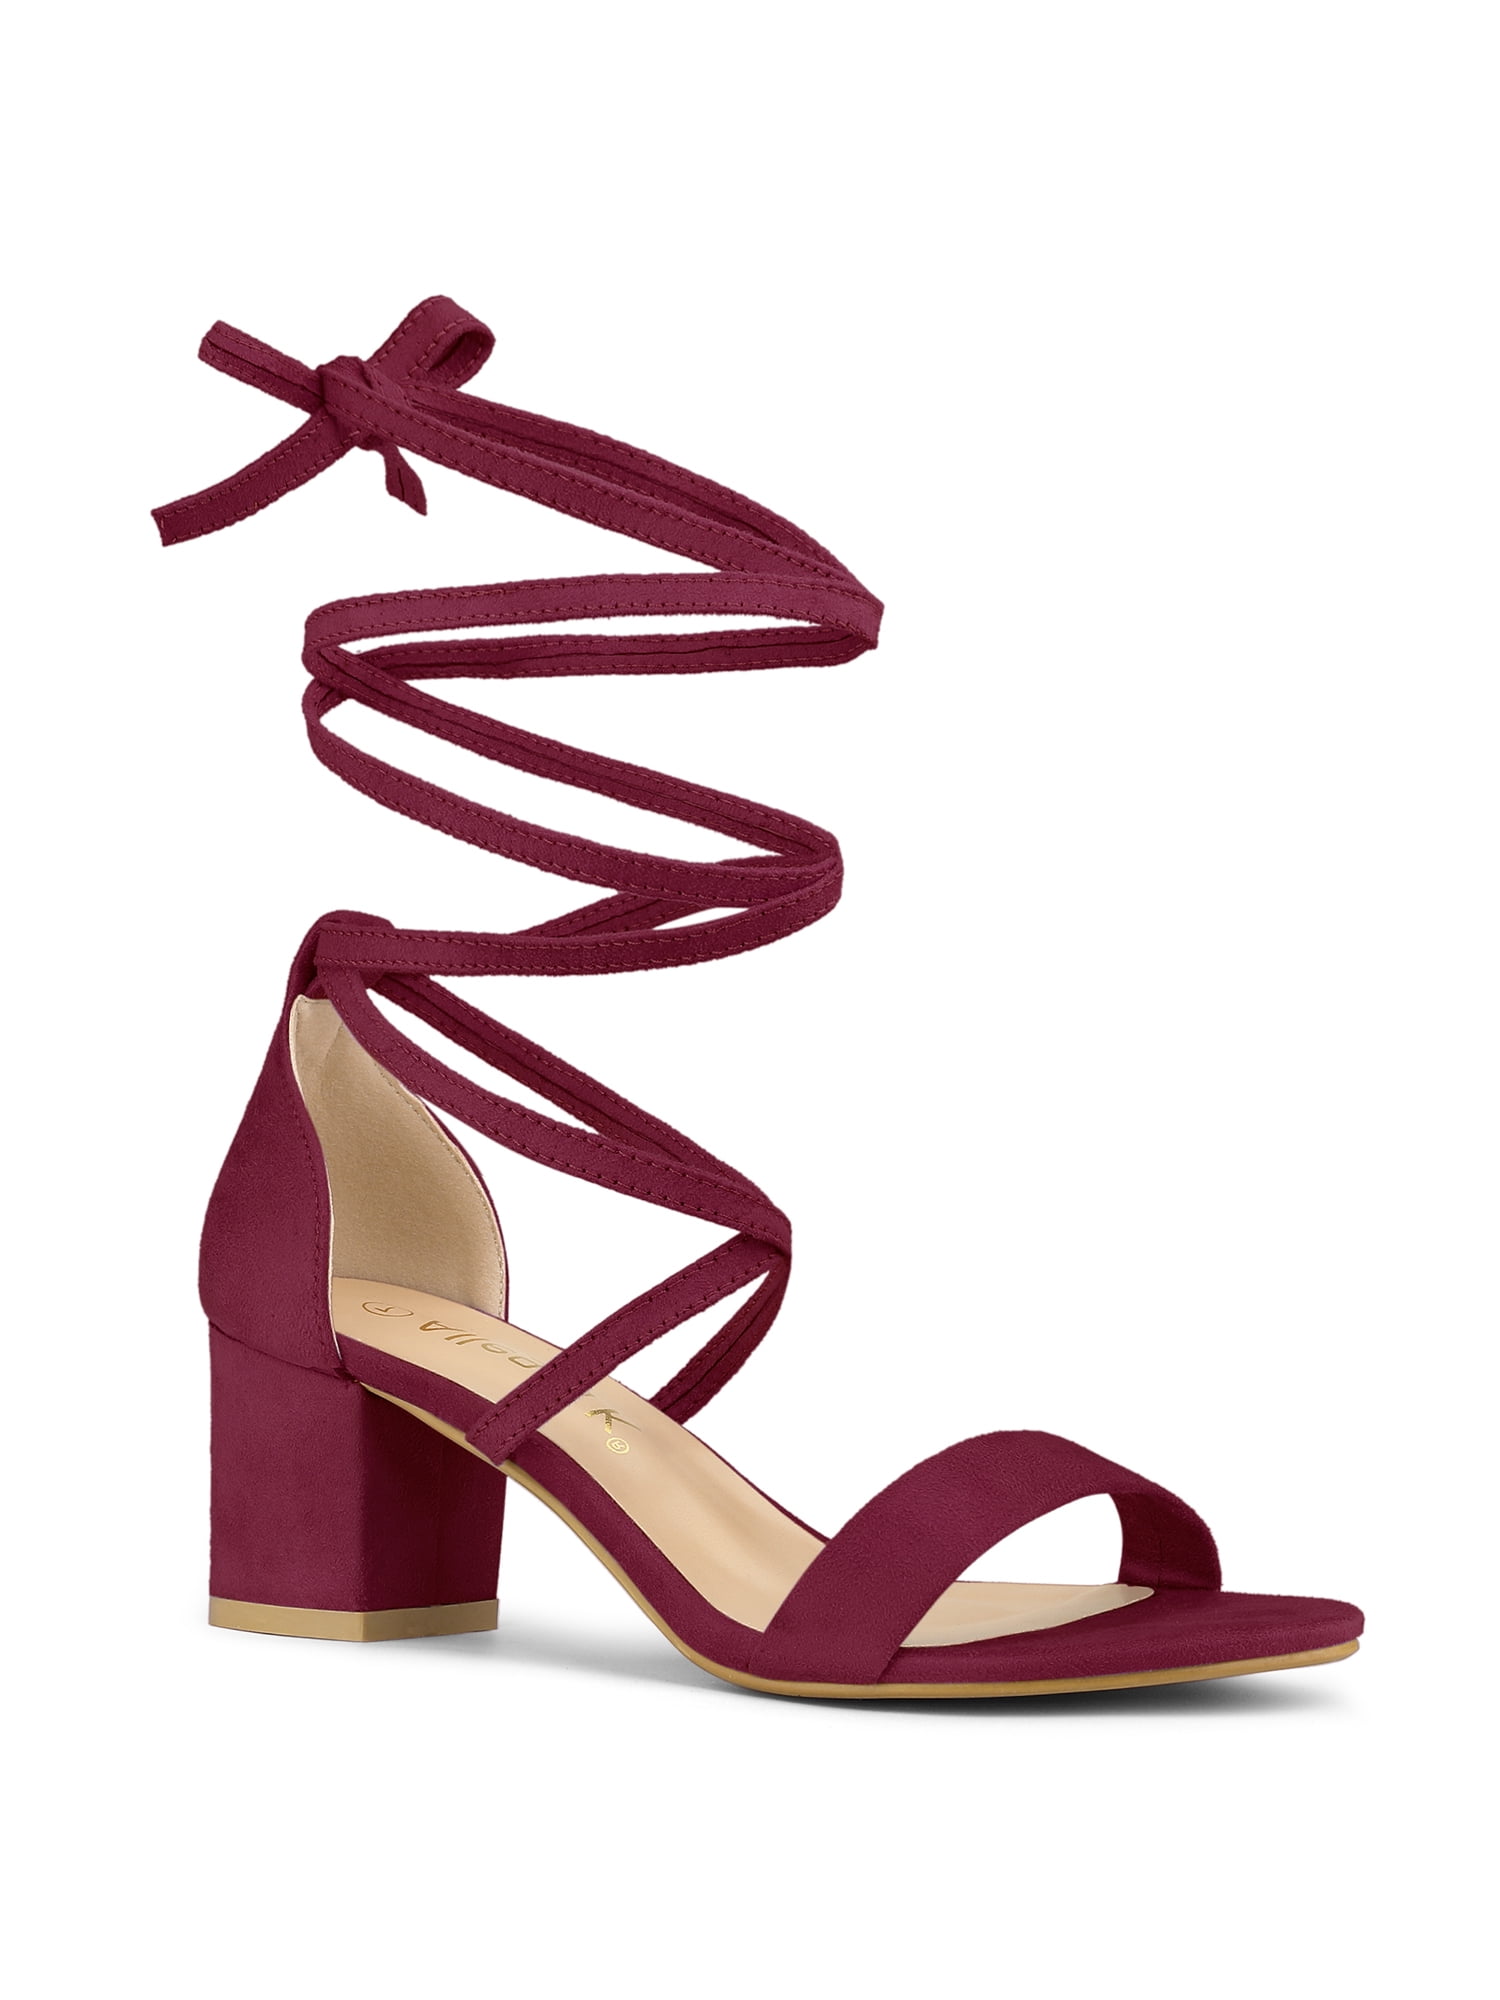 Allegra K Women's Ankle Strap Pointed Toe Block Heels Pumps Burgundy 8.5